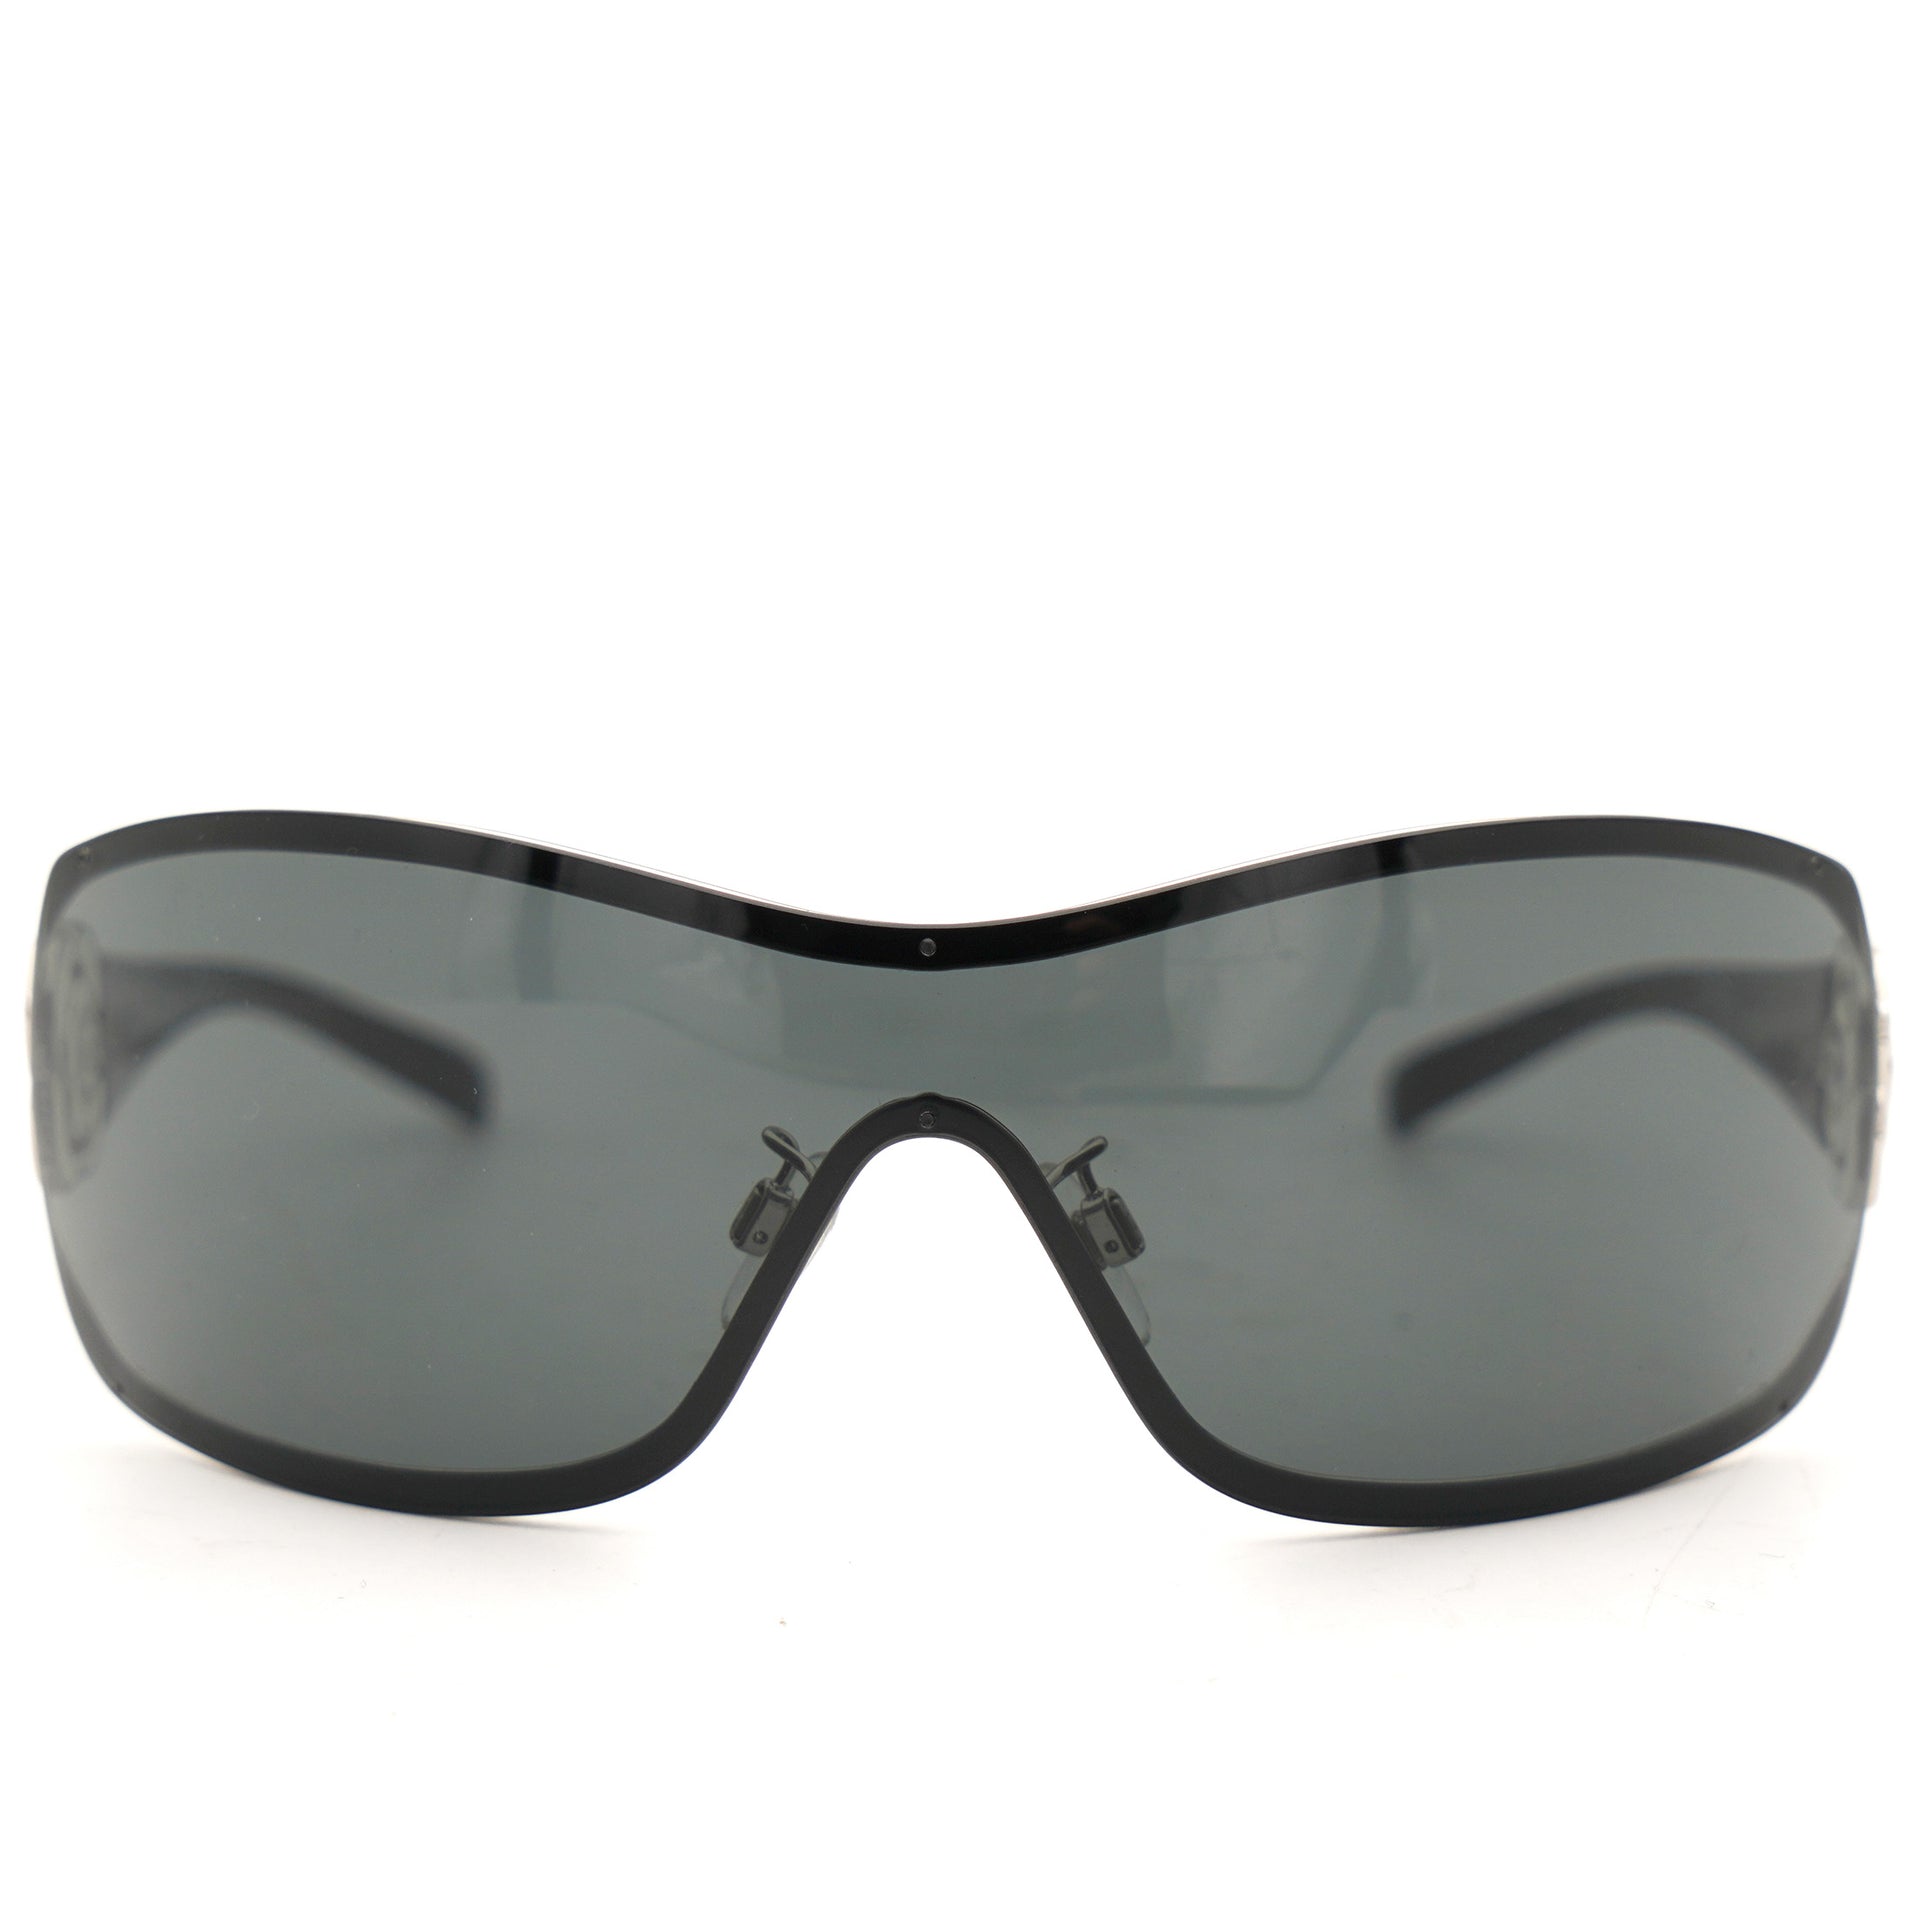 CHANEL Vintage Sunglasses Rare Matelasse Leather Quilted Wrap  Etsy  Sunglasses  vintage Vintage chanel Sunglasses